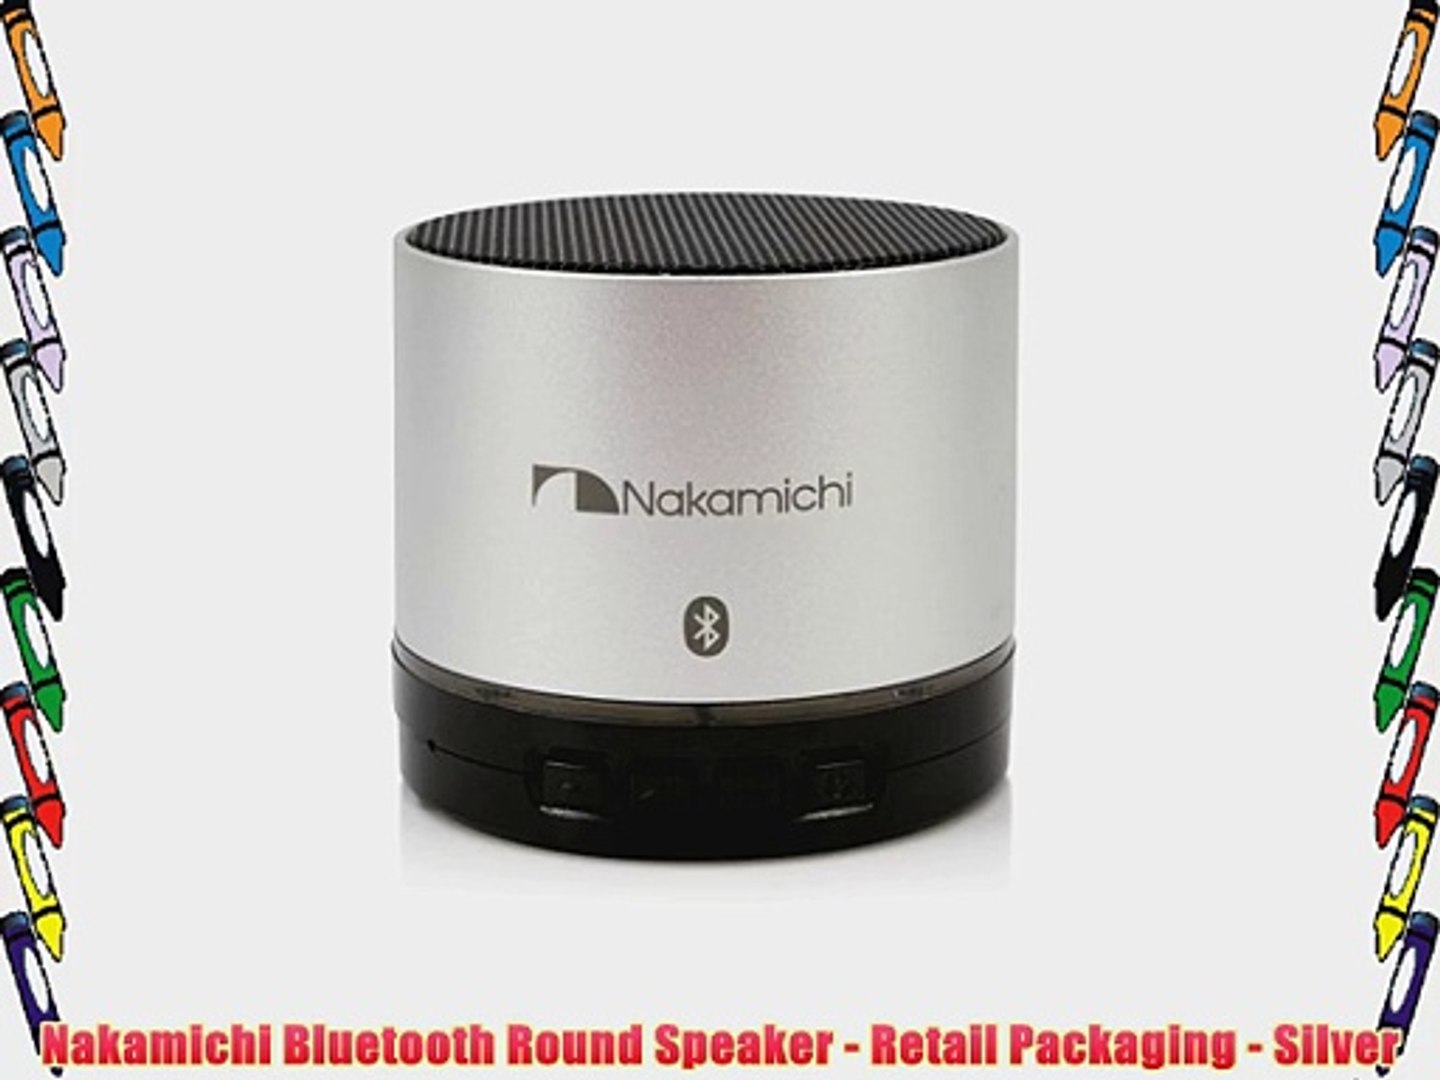 Nakamichi Bluetooth Round Speaker - Retail Packaging - Silver